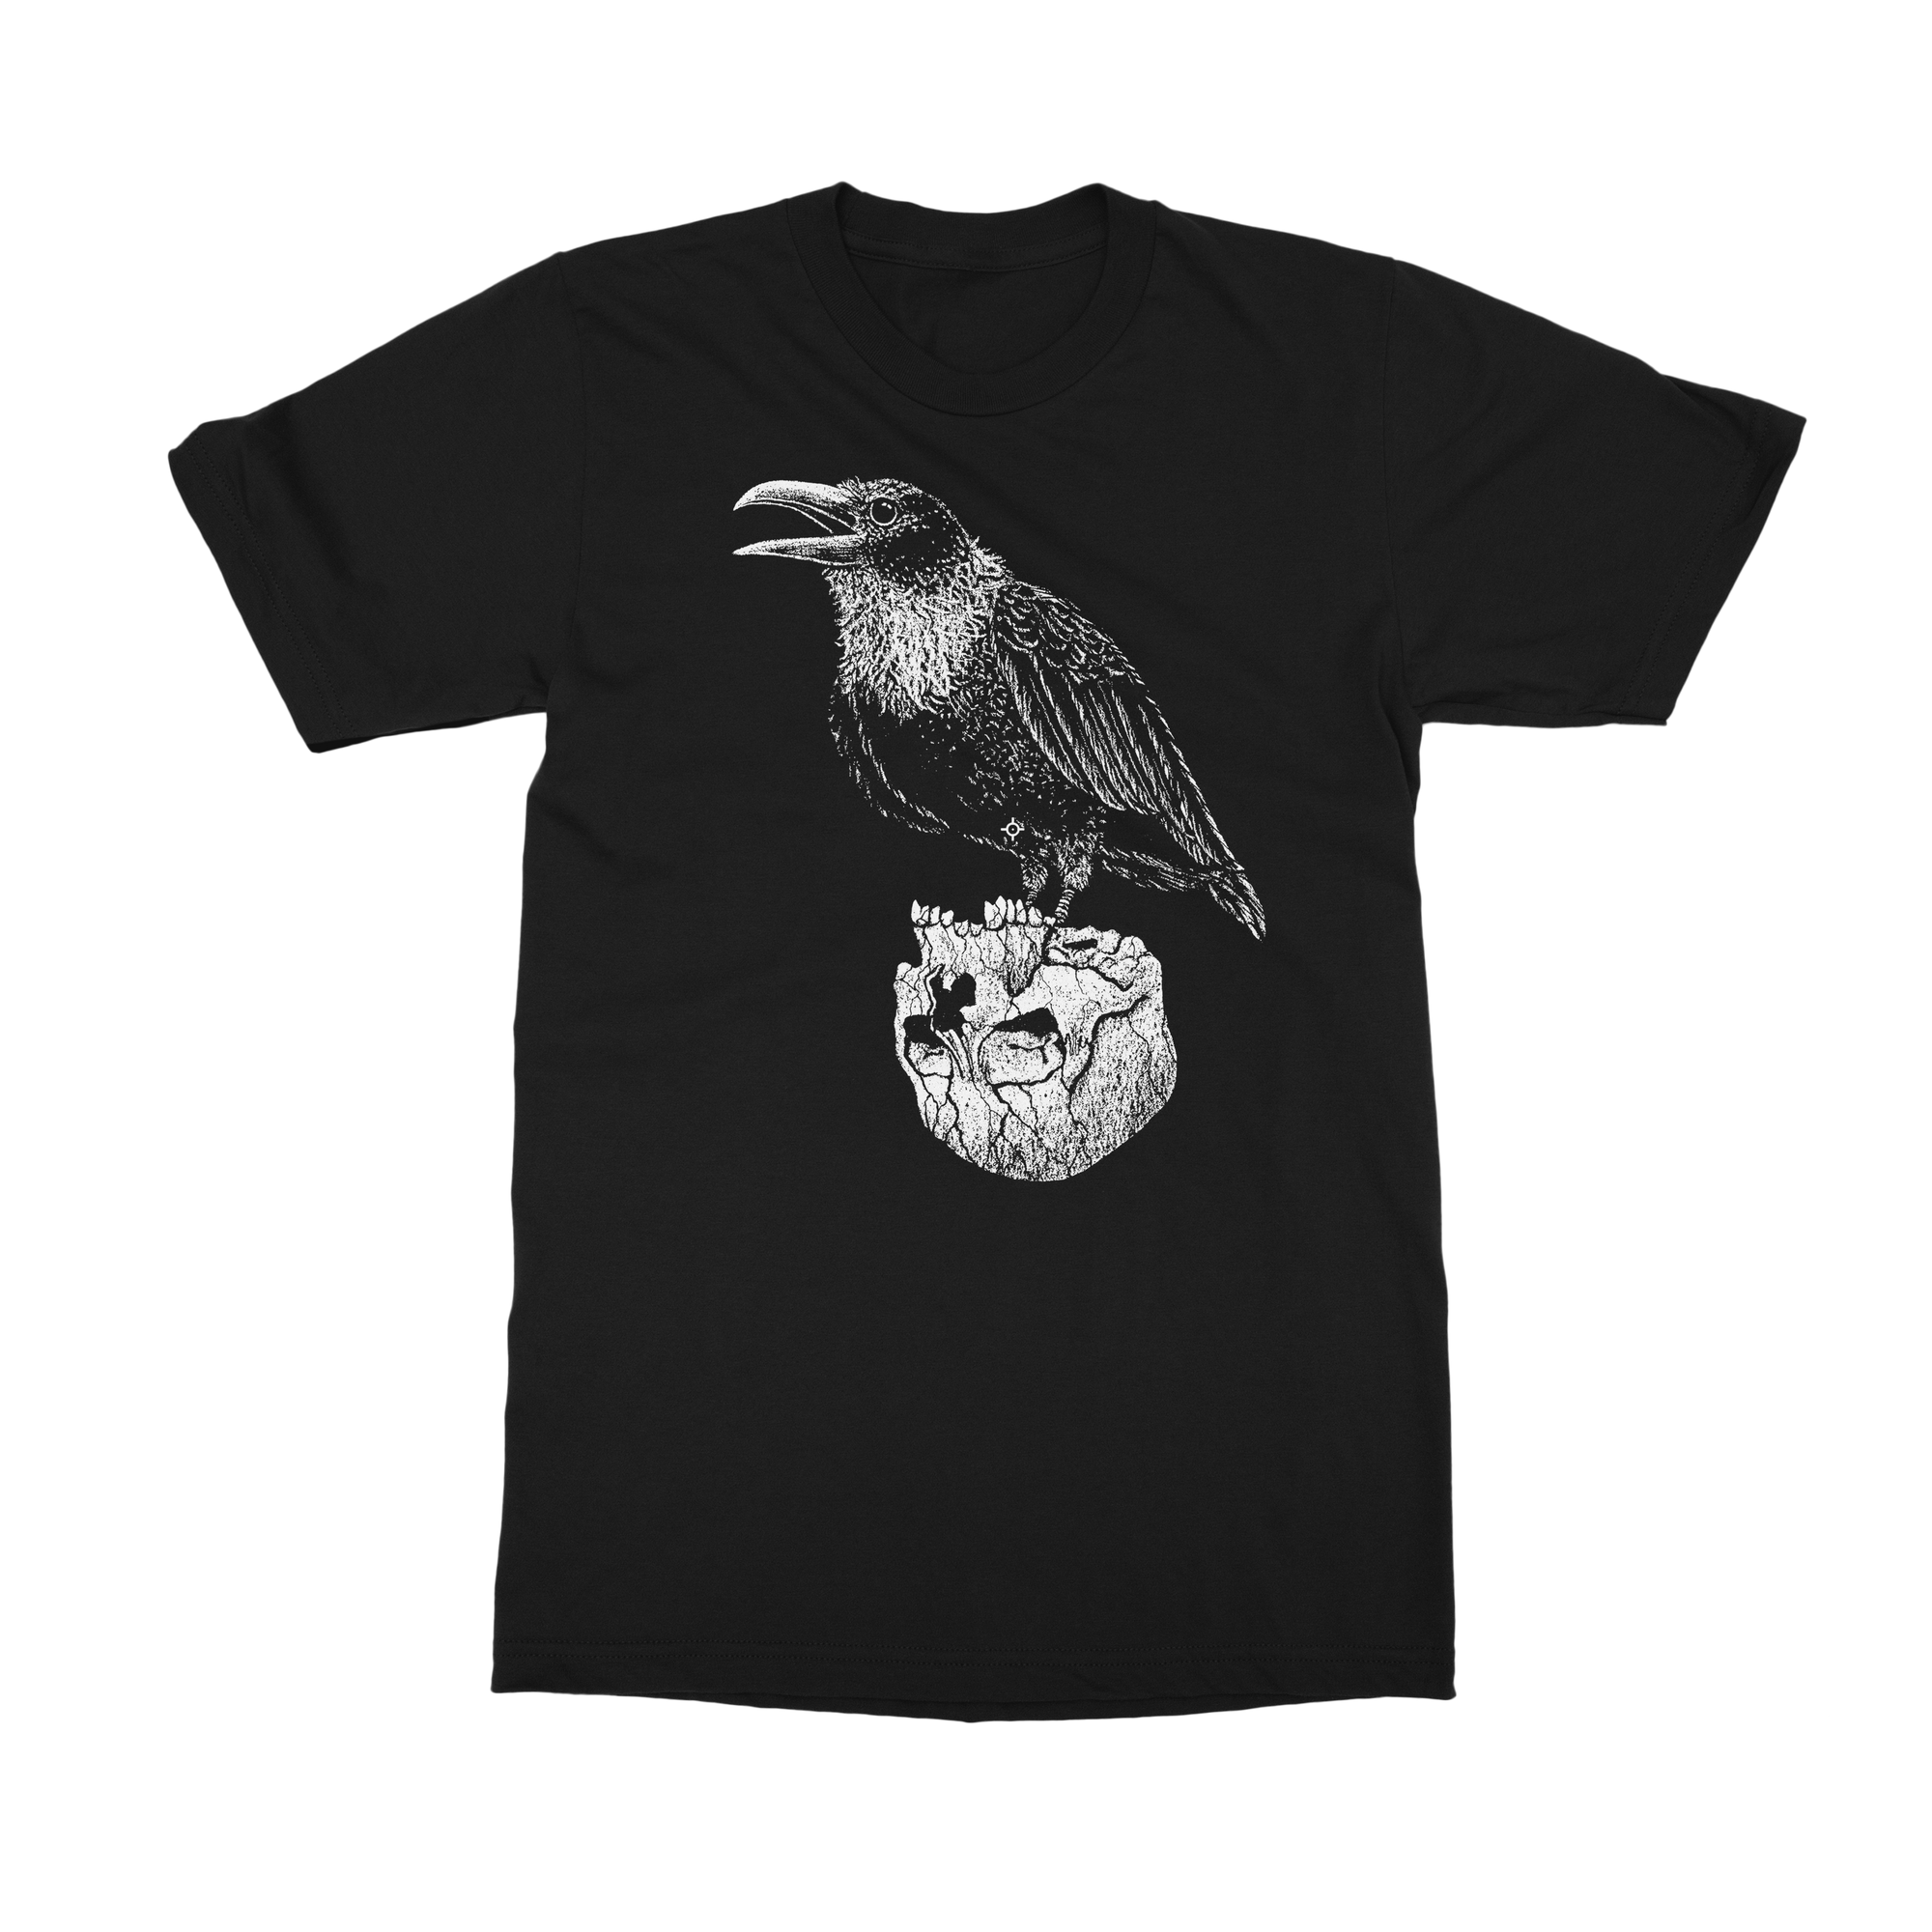 The Familiar Raven T-Shirt by Dylan Garrett Smith